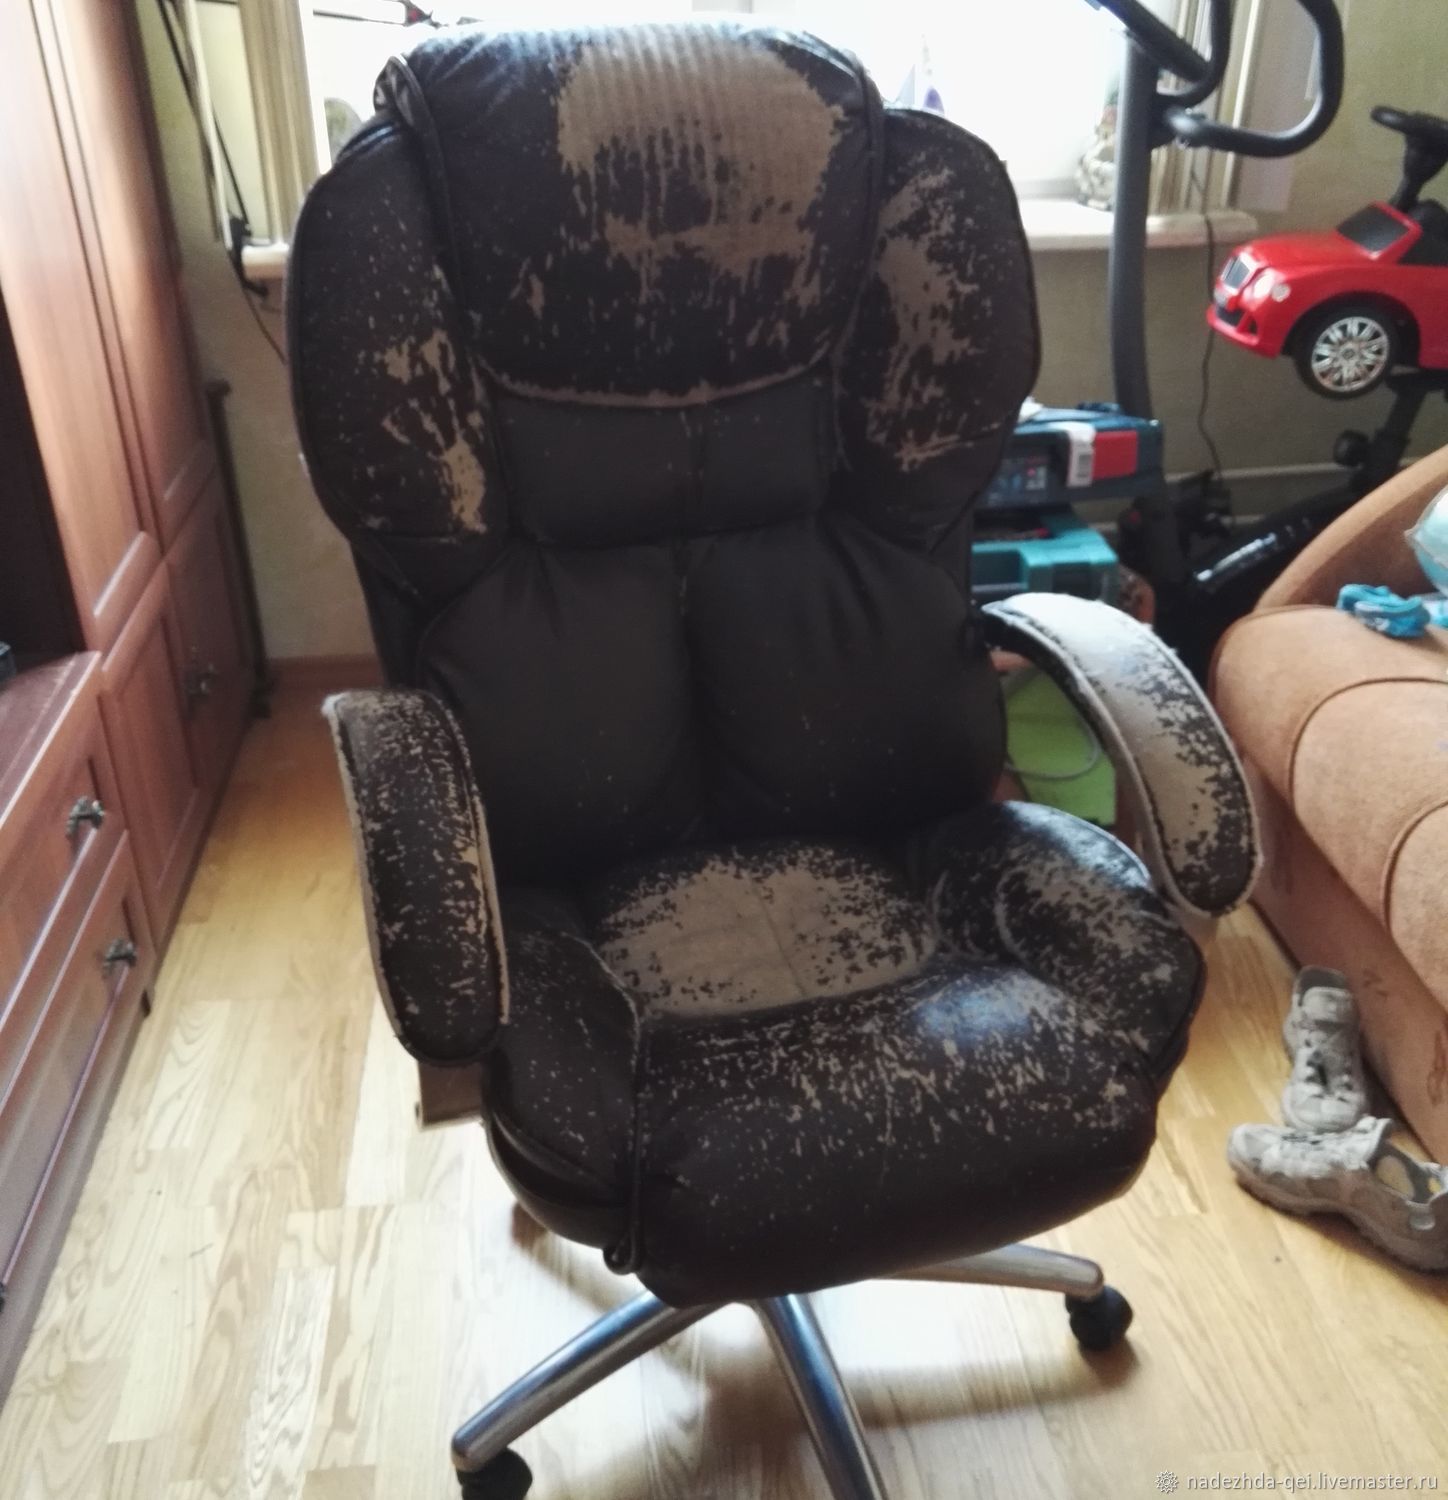 Перетяжка компьютерного кресла в домашних условиях